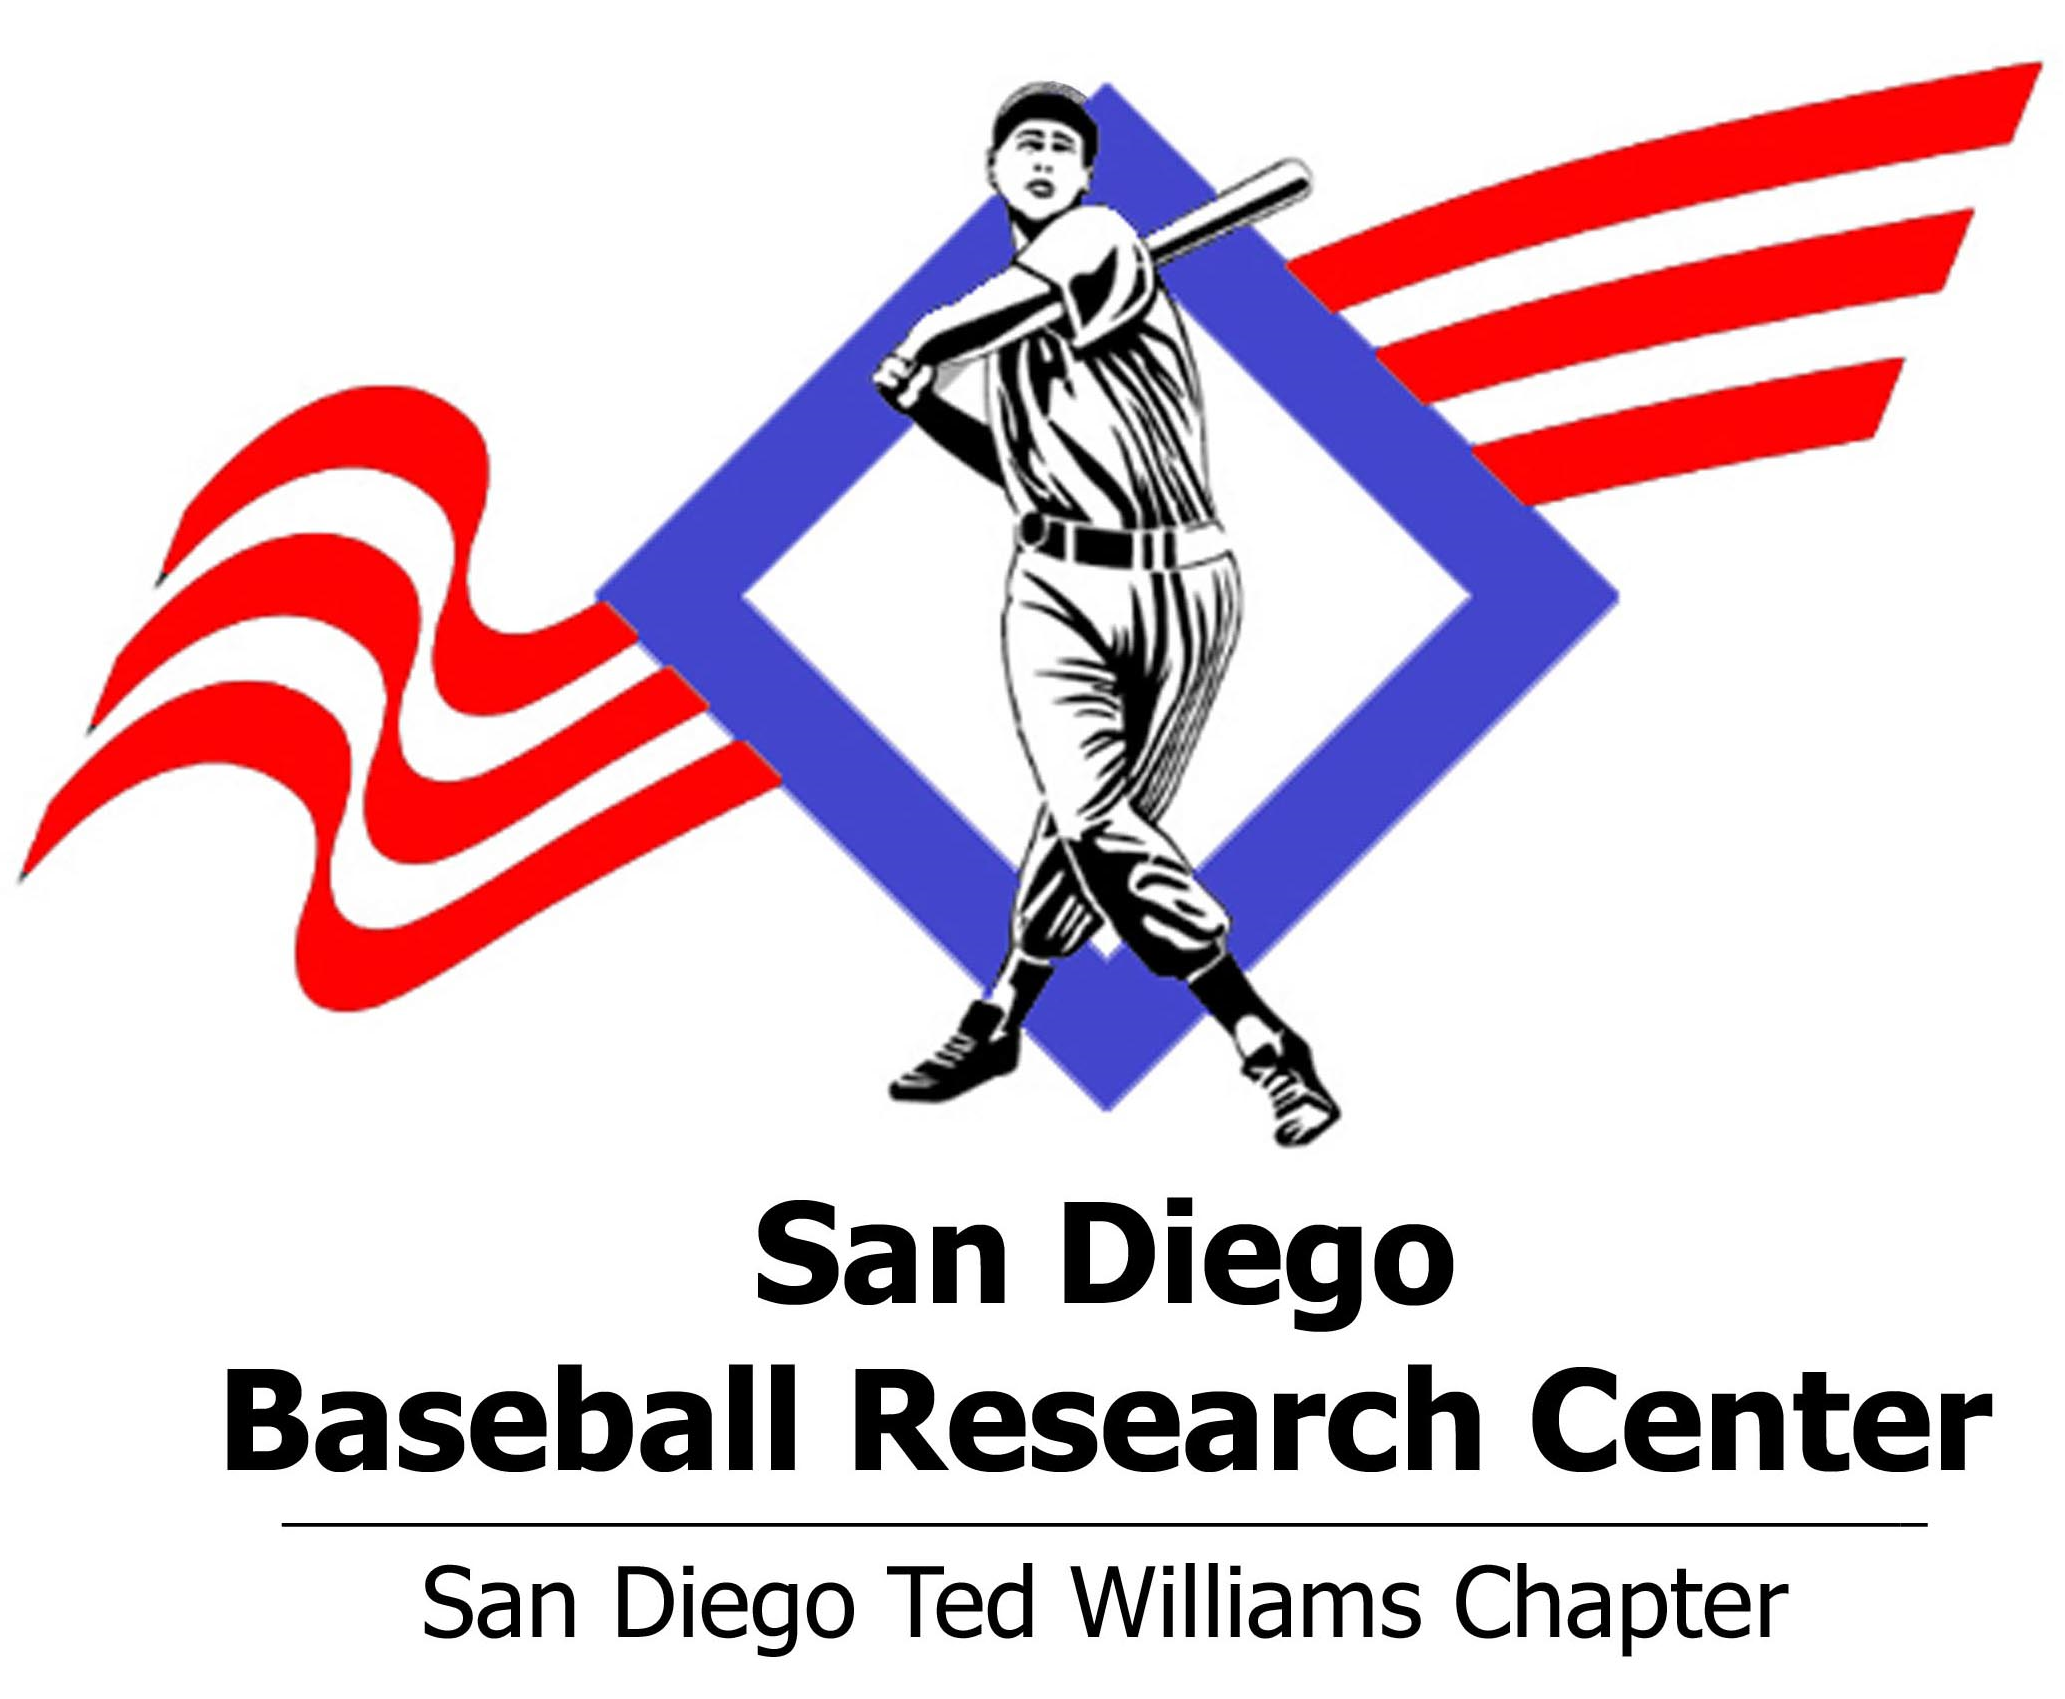 Ted Williams Swinging Bat Logo